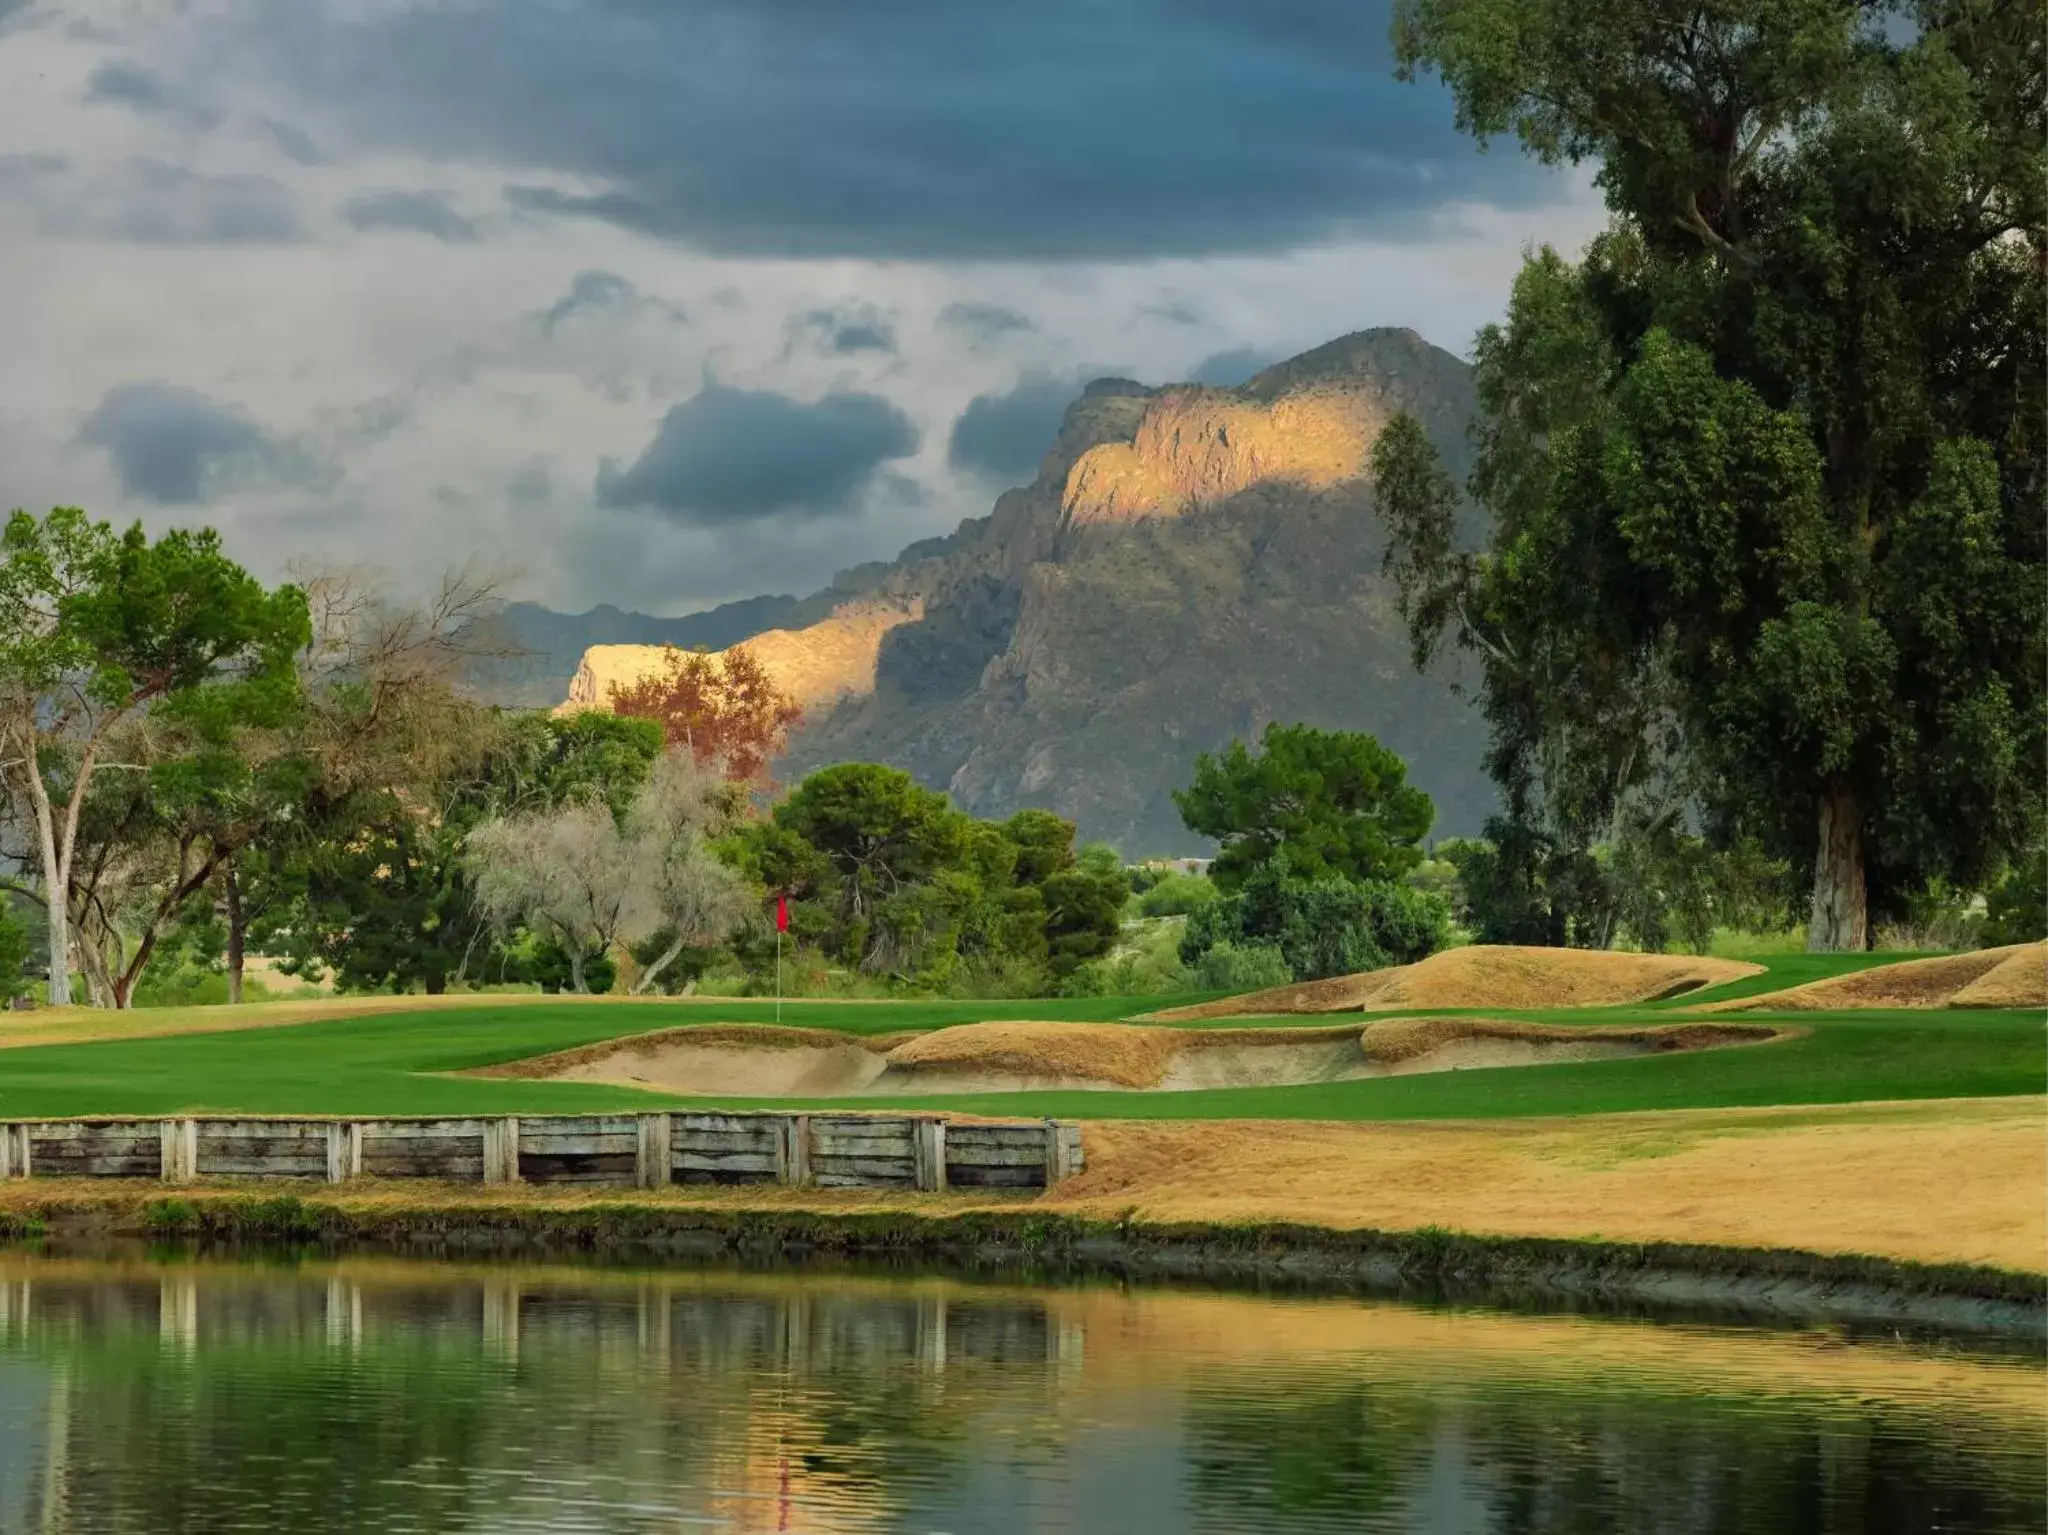 Golfcourse in Omni Tucson National Resort